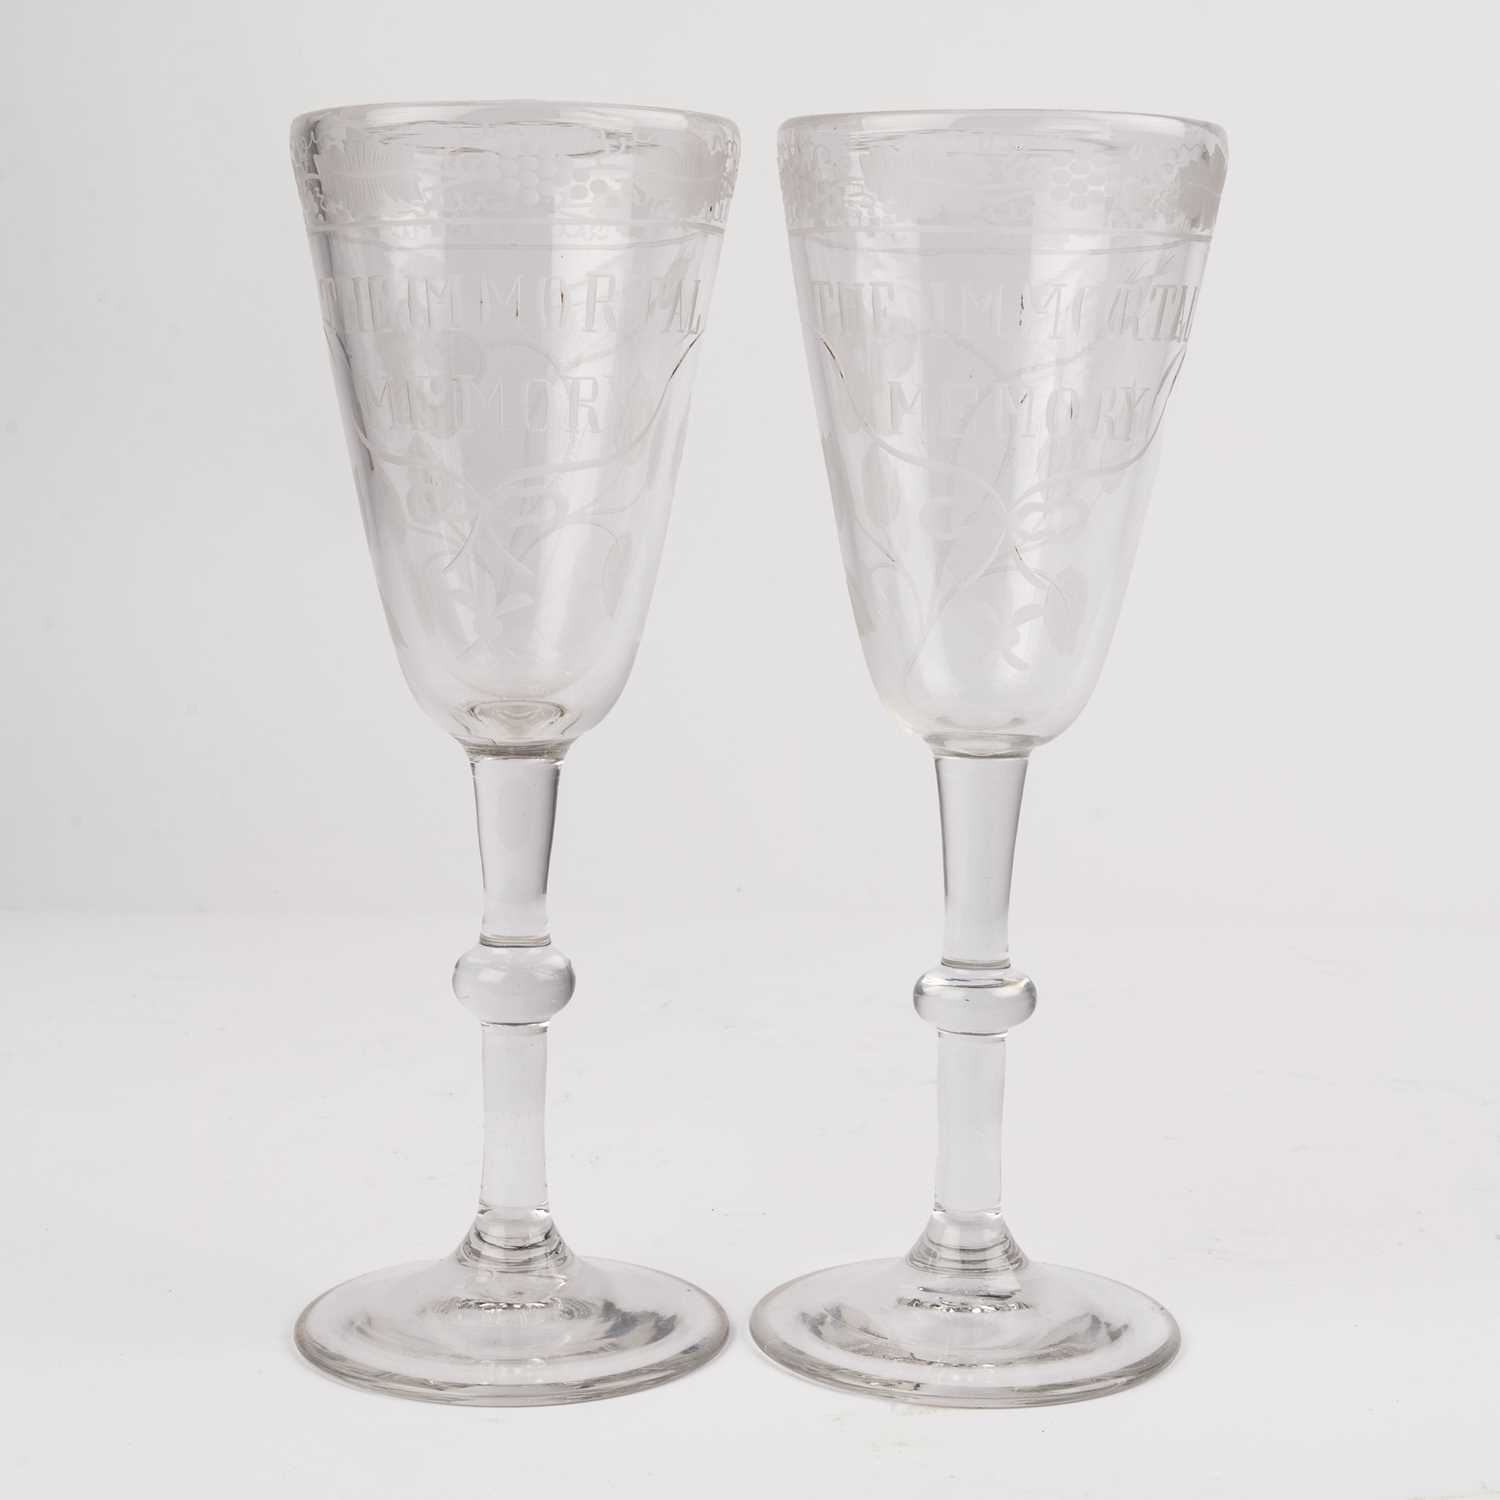 Lot 168 - A pair of antique Scottish wine glasses